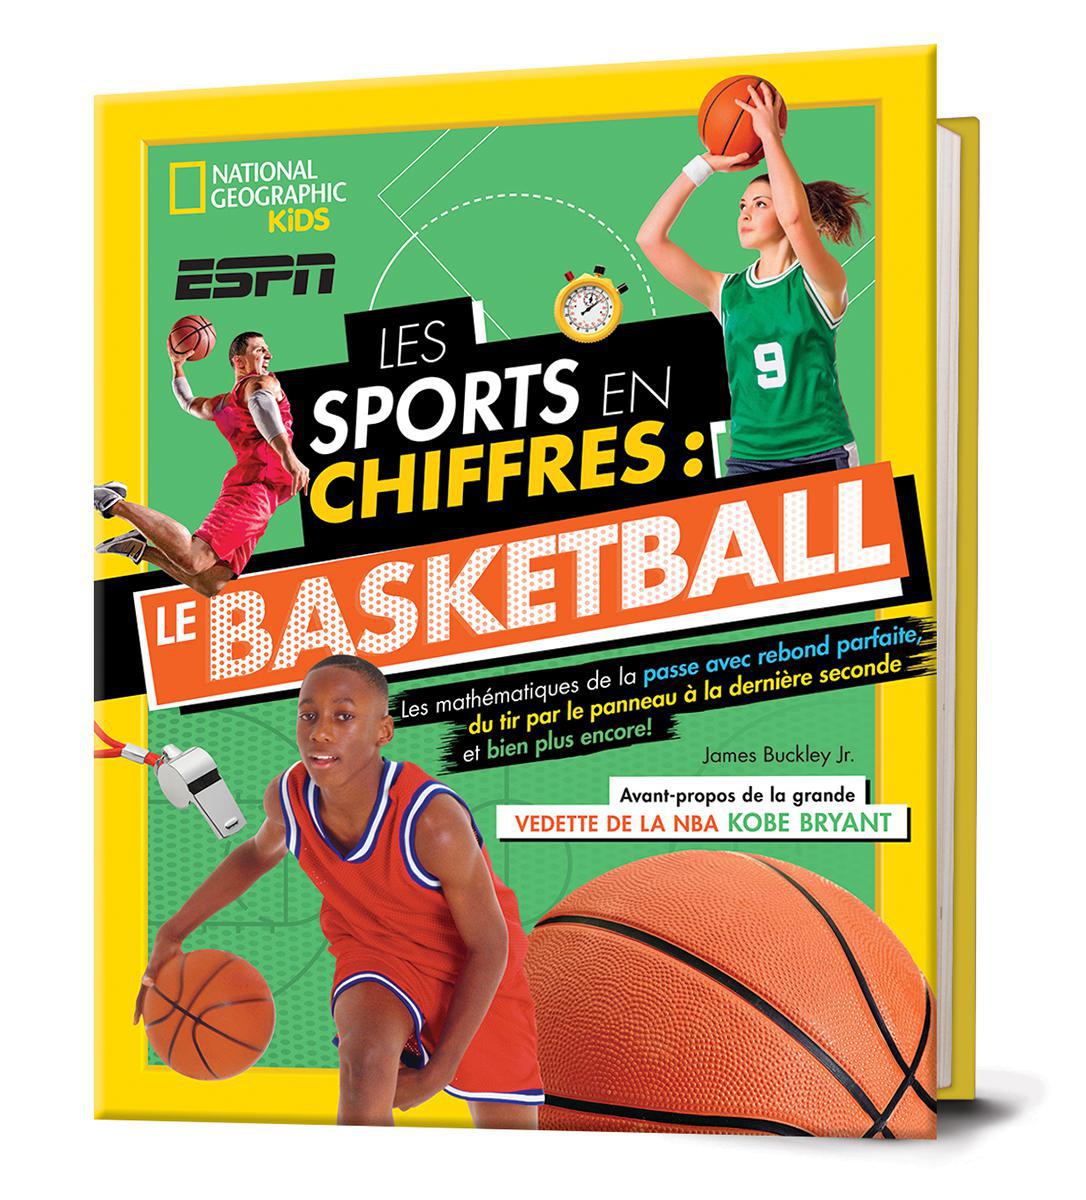  National Geographic Kids : Les sports en chiffres - Le basketball 